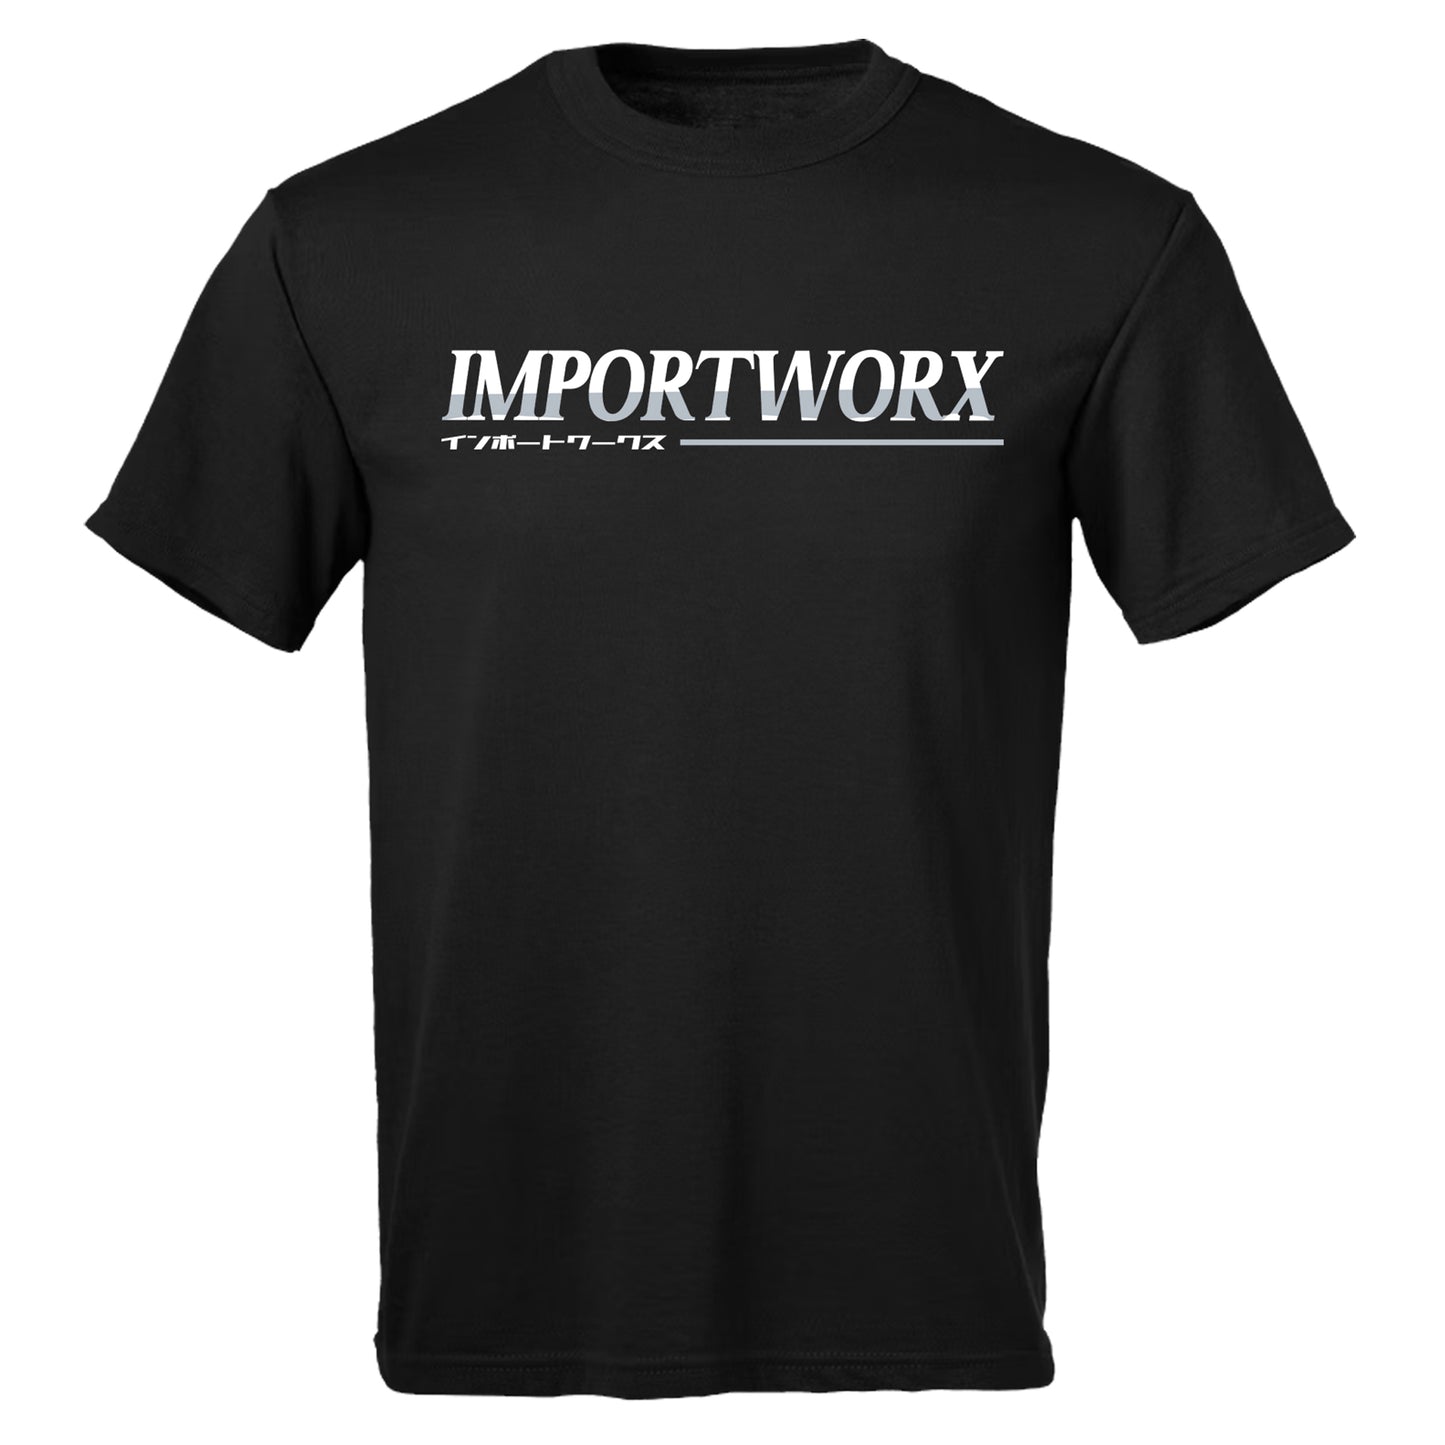 ImportWorx x RotangKlan Tee Shirt